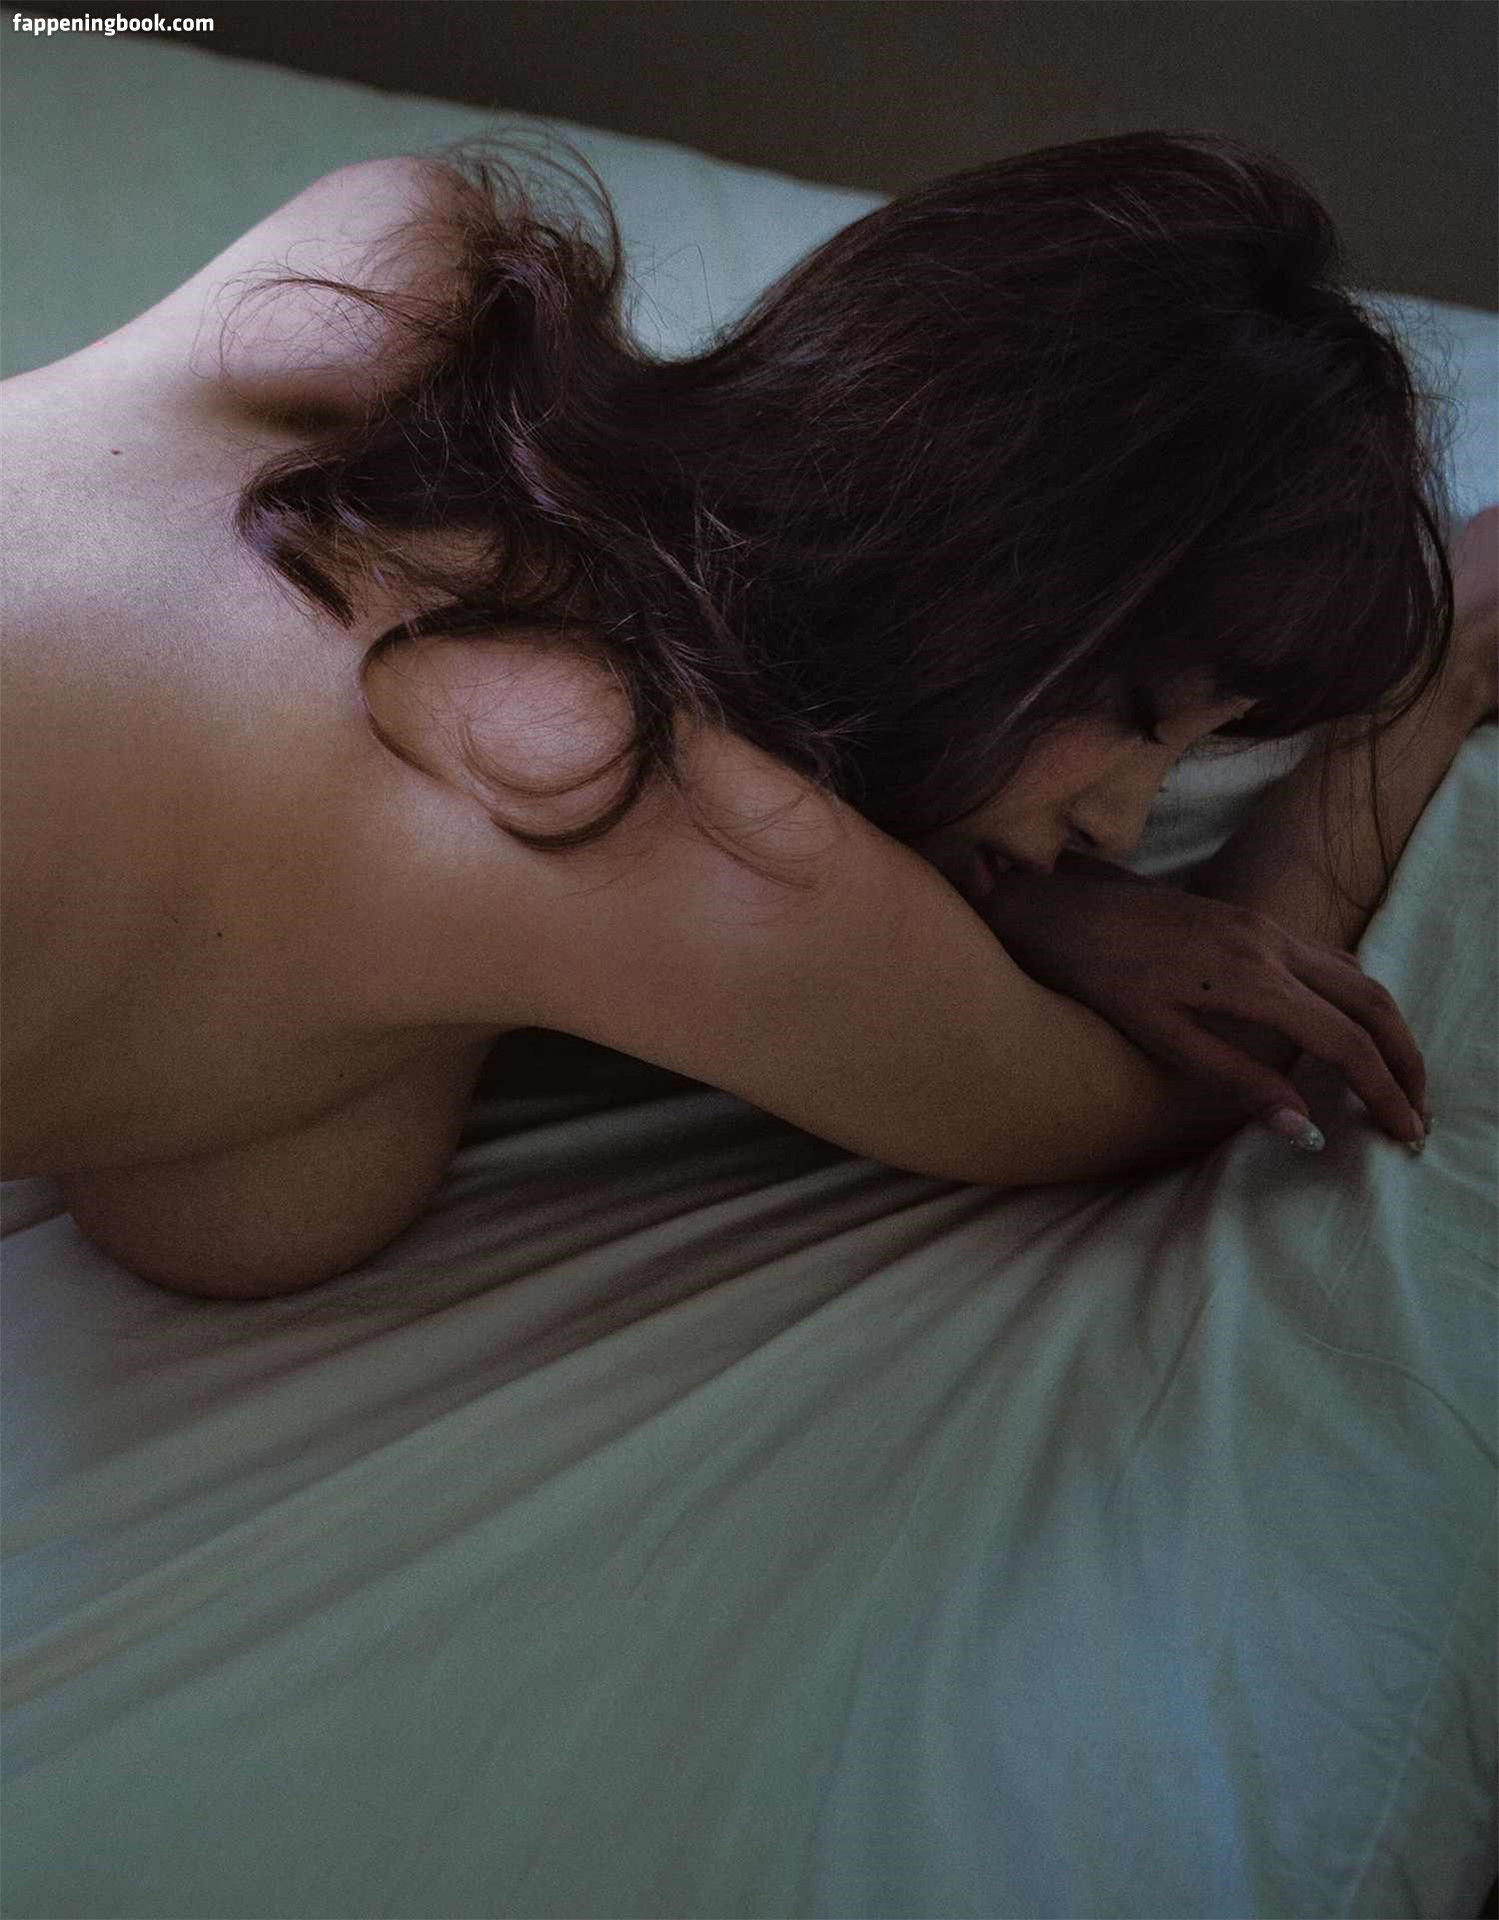 Shion Utsunomiya Nude The Fappening Photo Fappeningbook